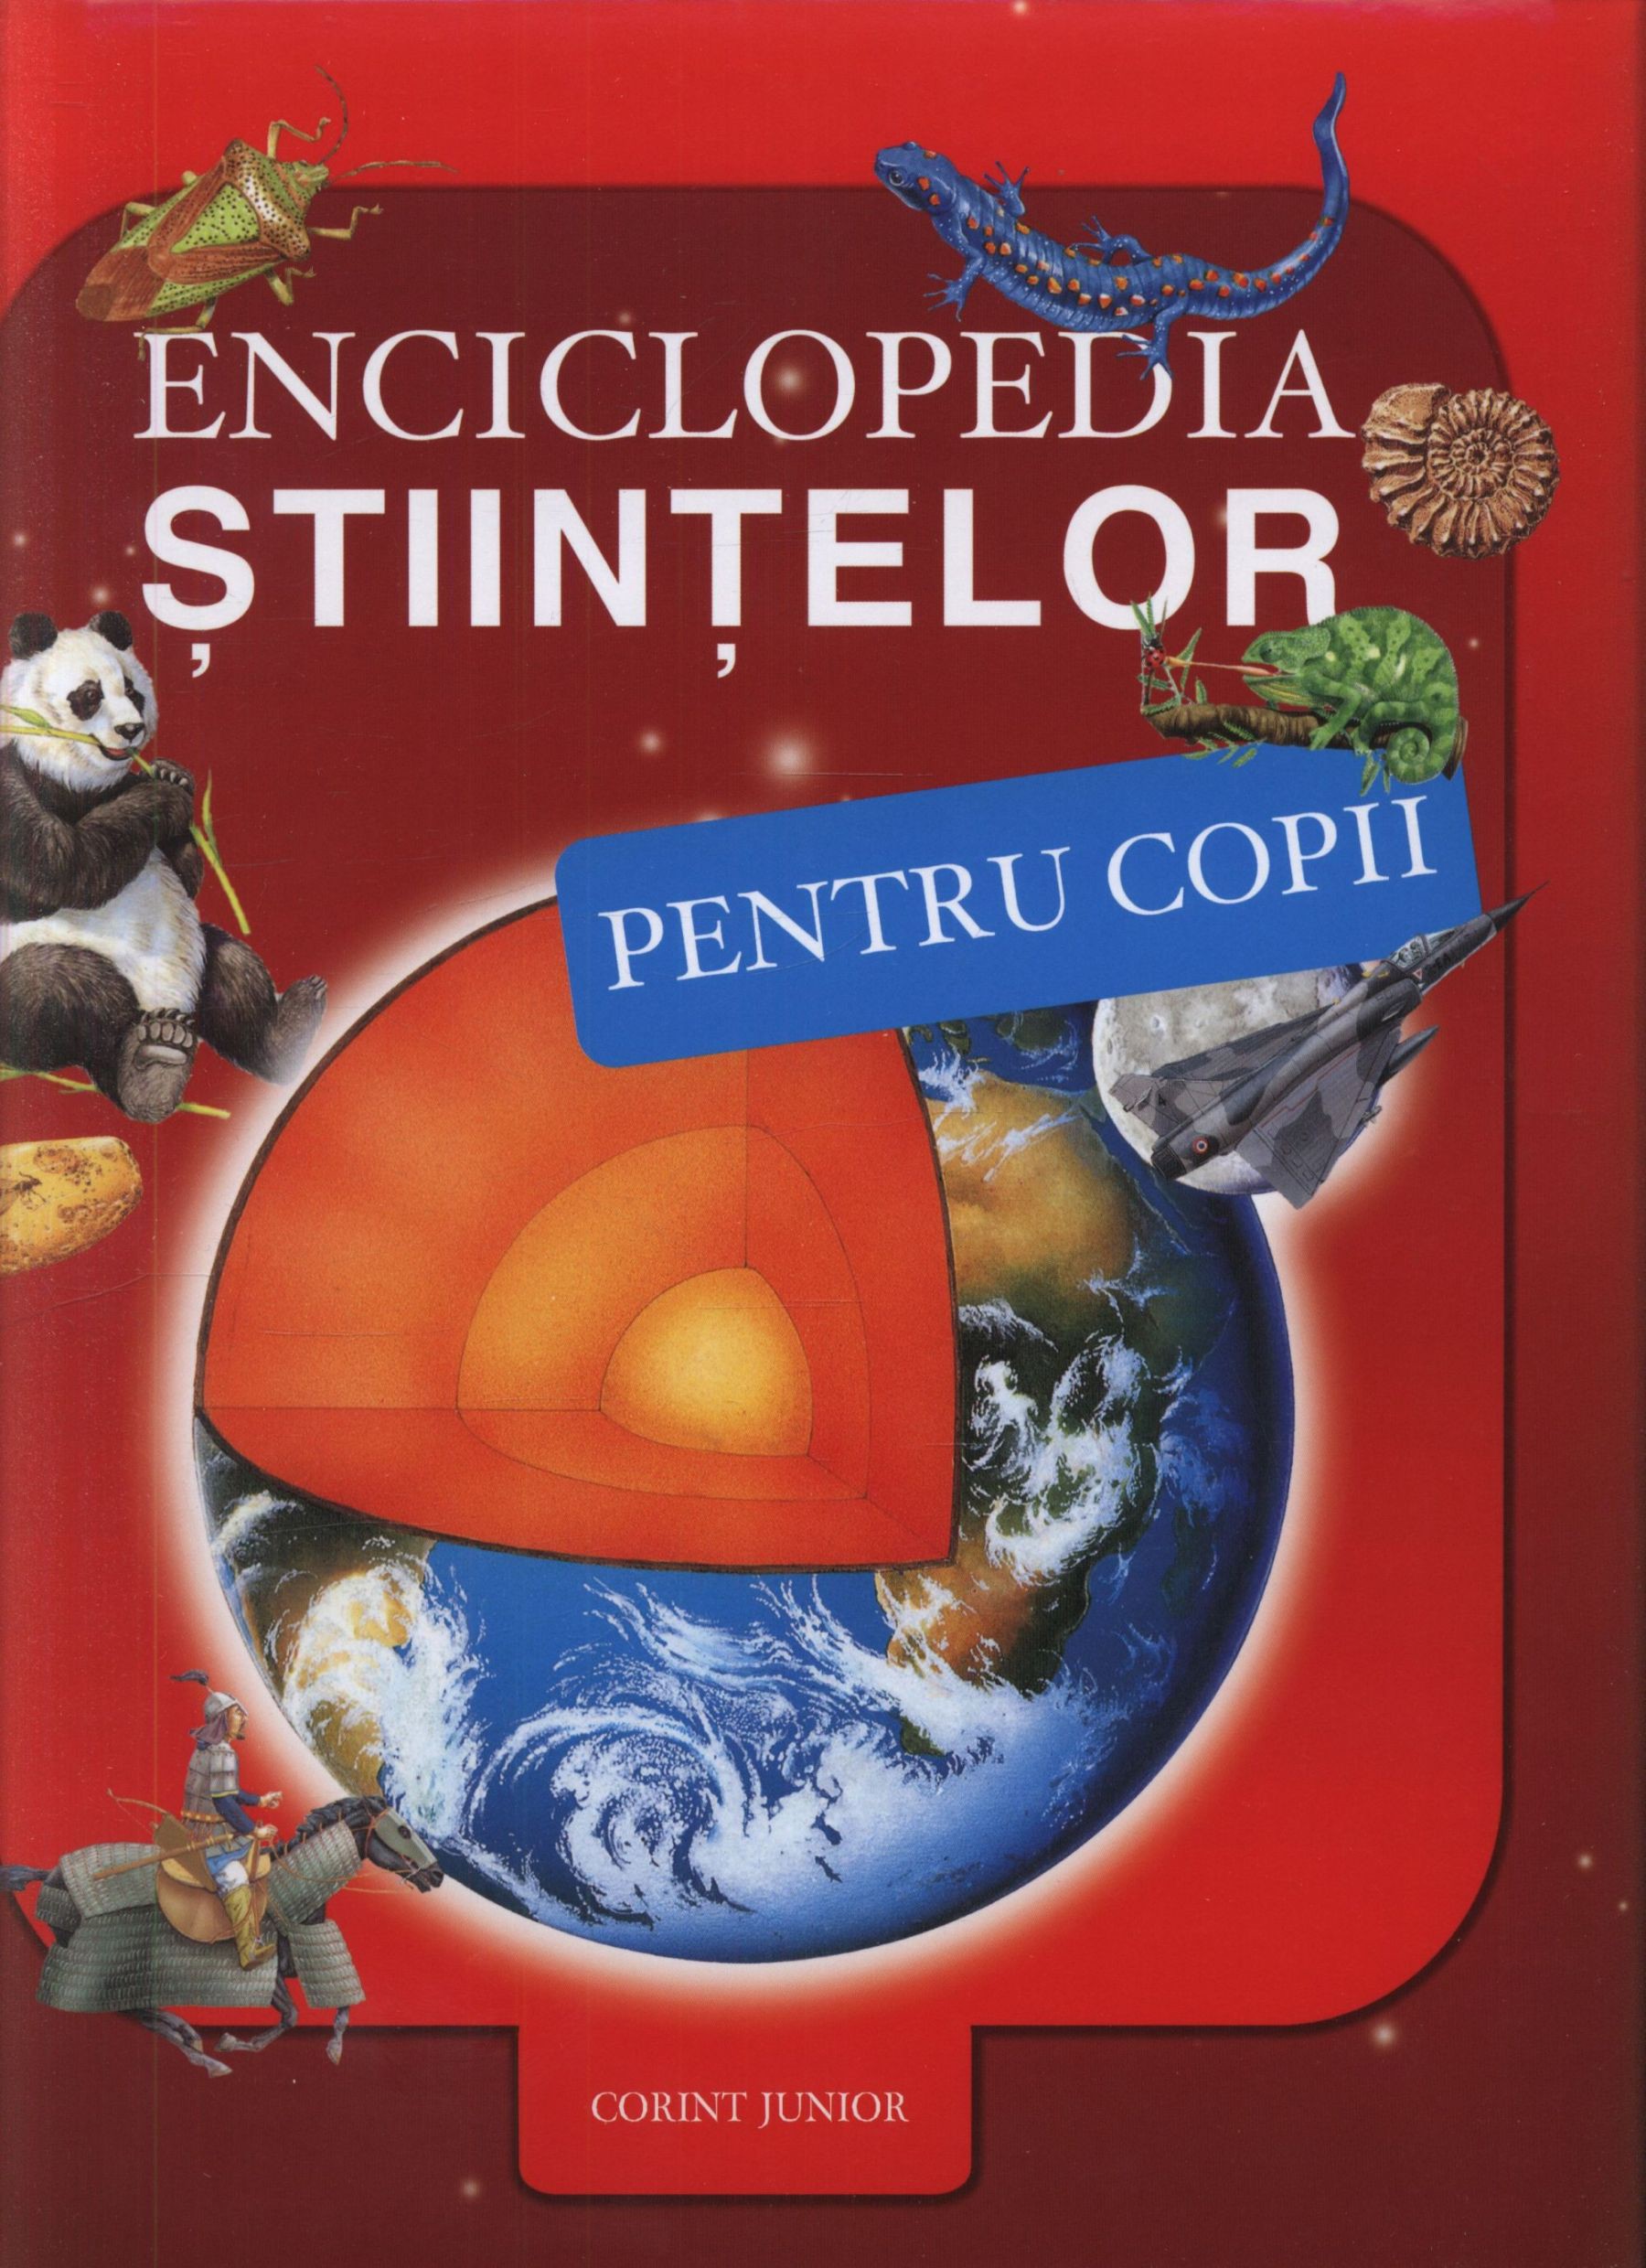 Enciclopedia stiintelor pentru copii | carturesti.ro poza bestsellers.ro